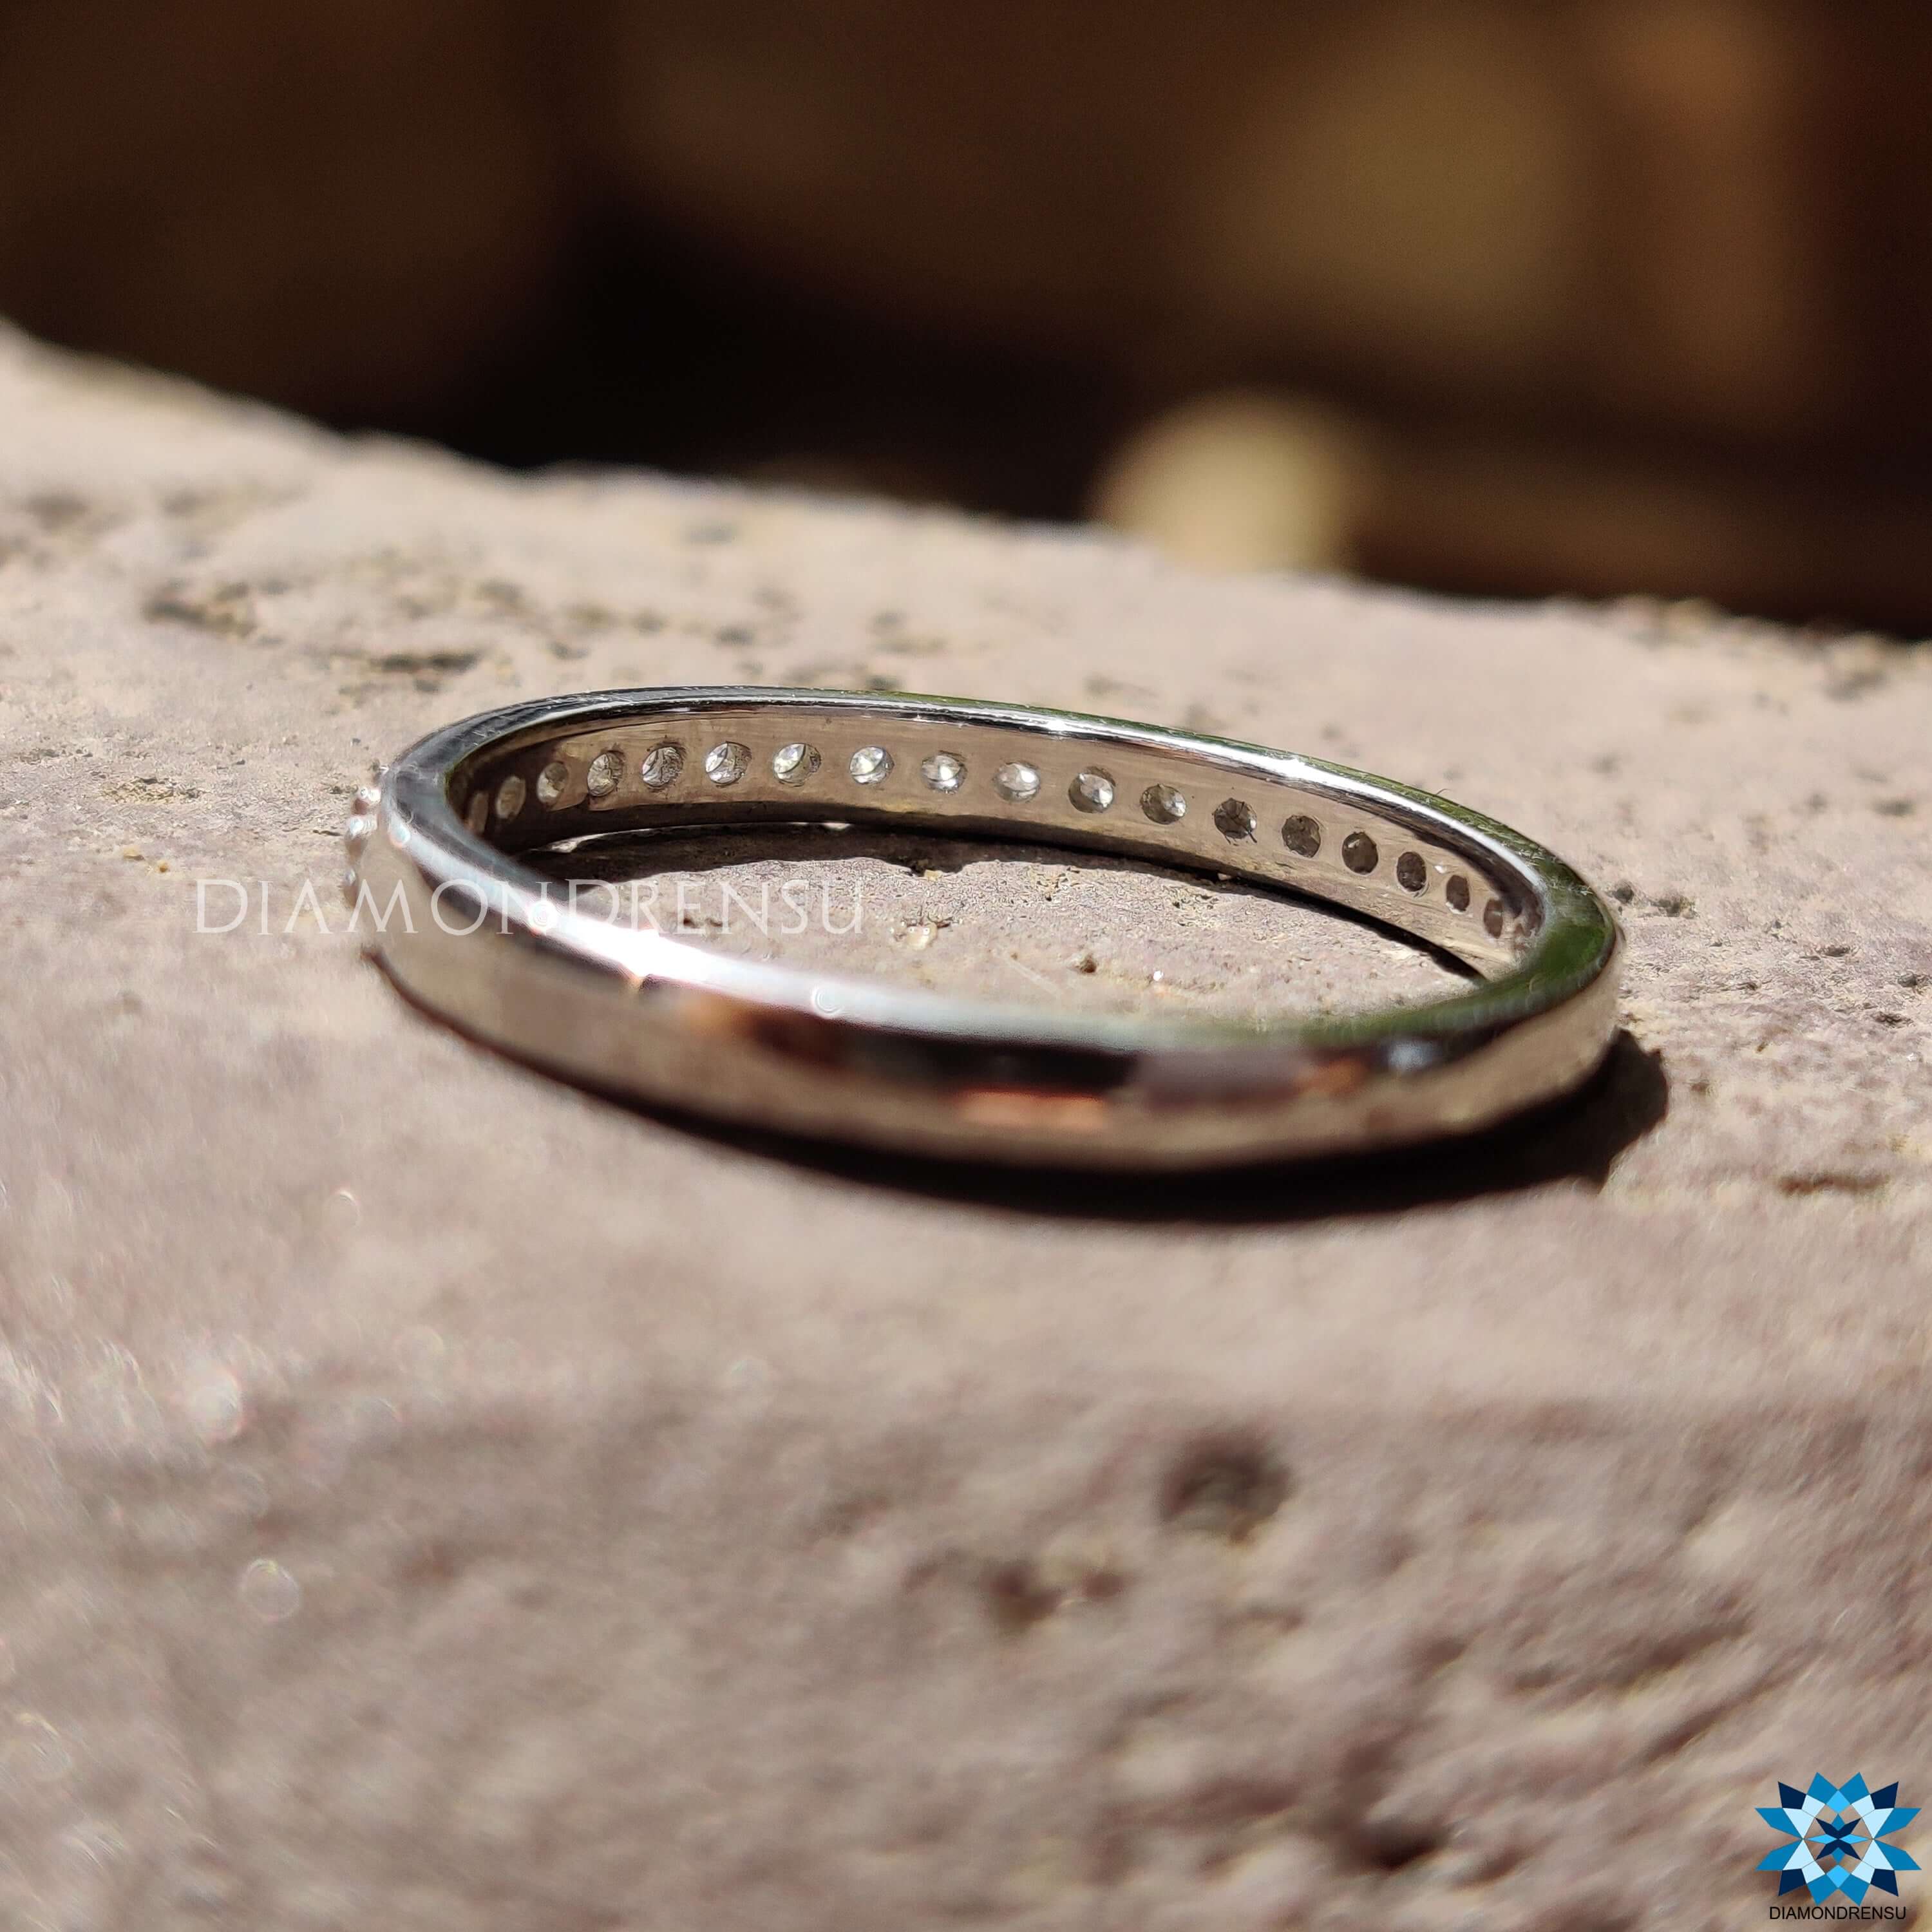 moissanite wedding ring set - diamondrensu